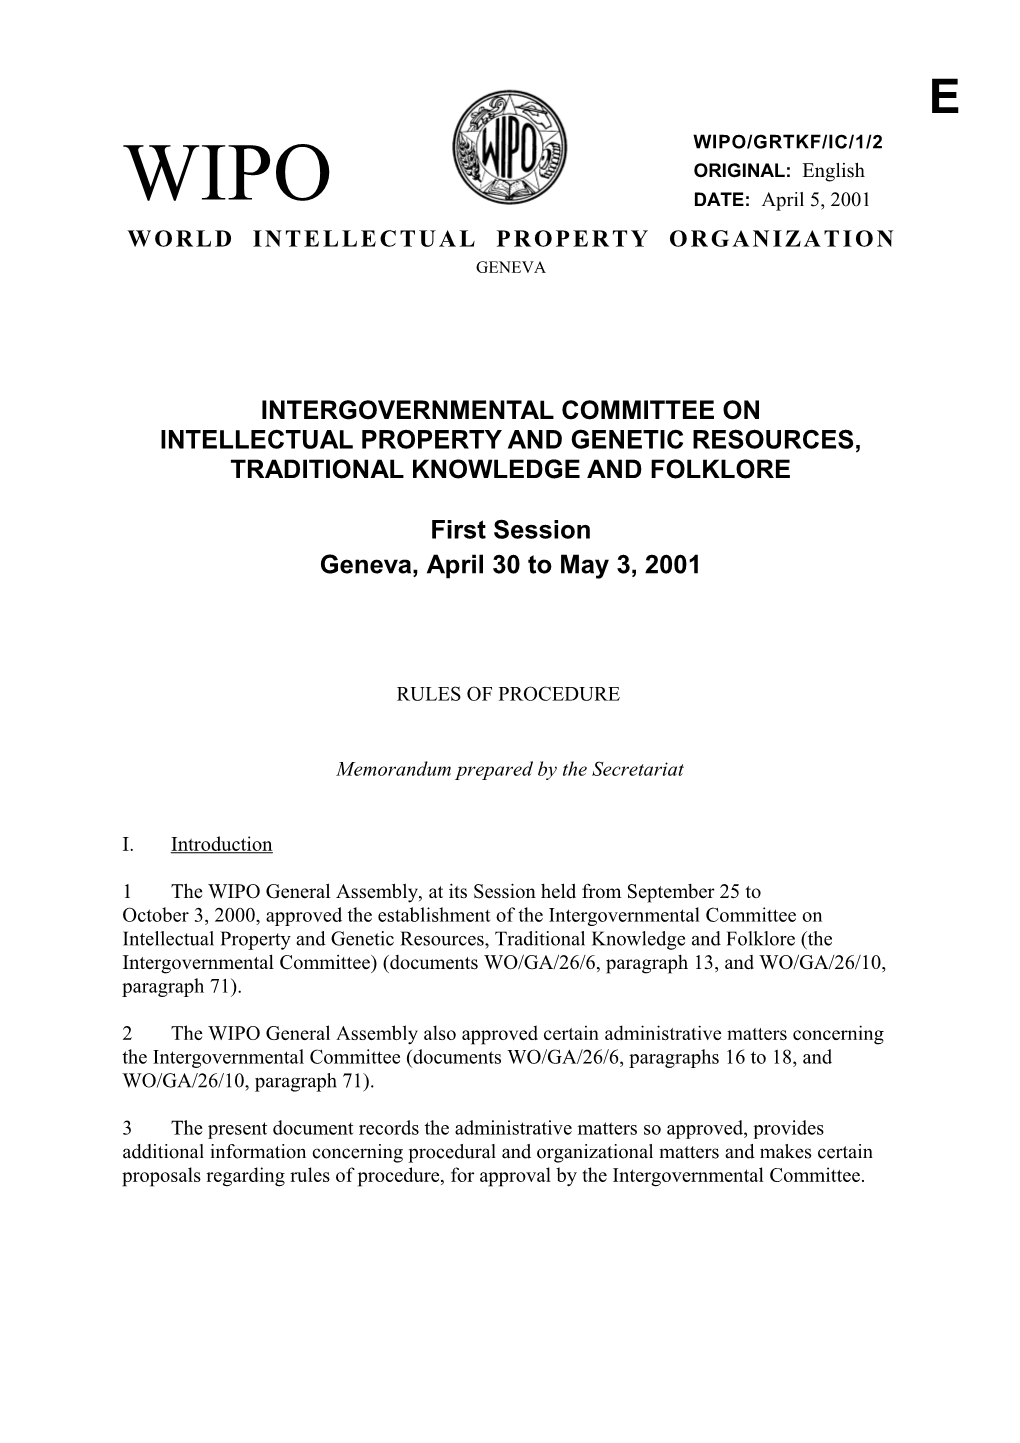 WIPO/GRTKF/IC/1/2: Rules of Procedure